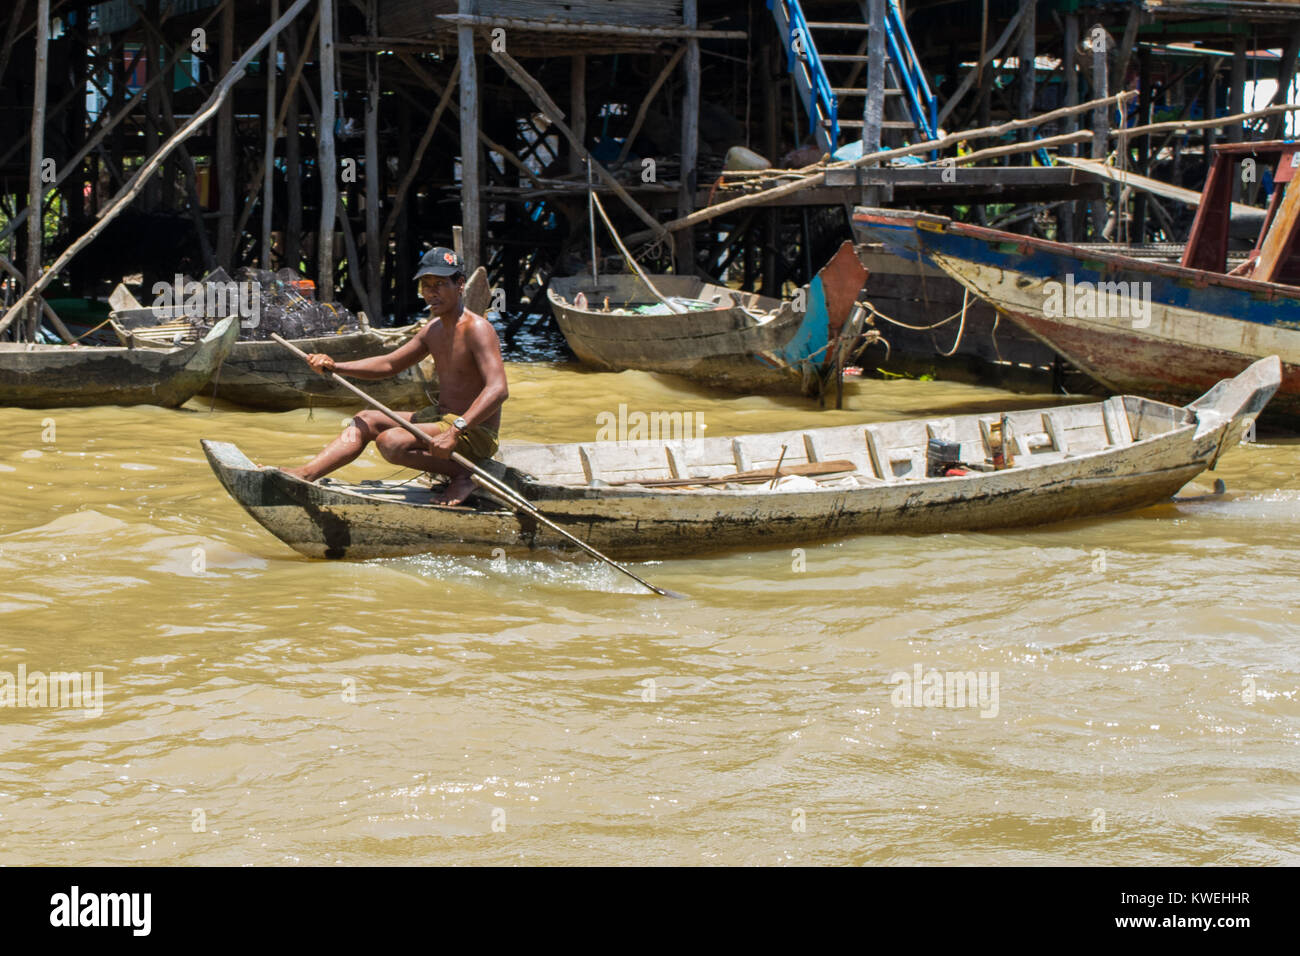 A Cambodian Asian brown skinned man rowing a wooden boat in Kampong Phluk Tone Sap Great Lake floodplain village on stilts, near Siem Reap, Cambodia Stock Photo